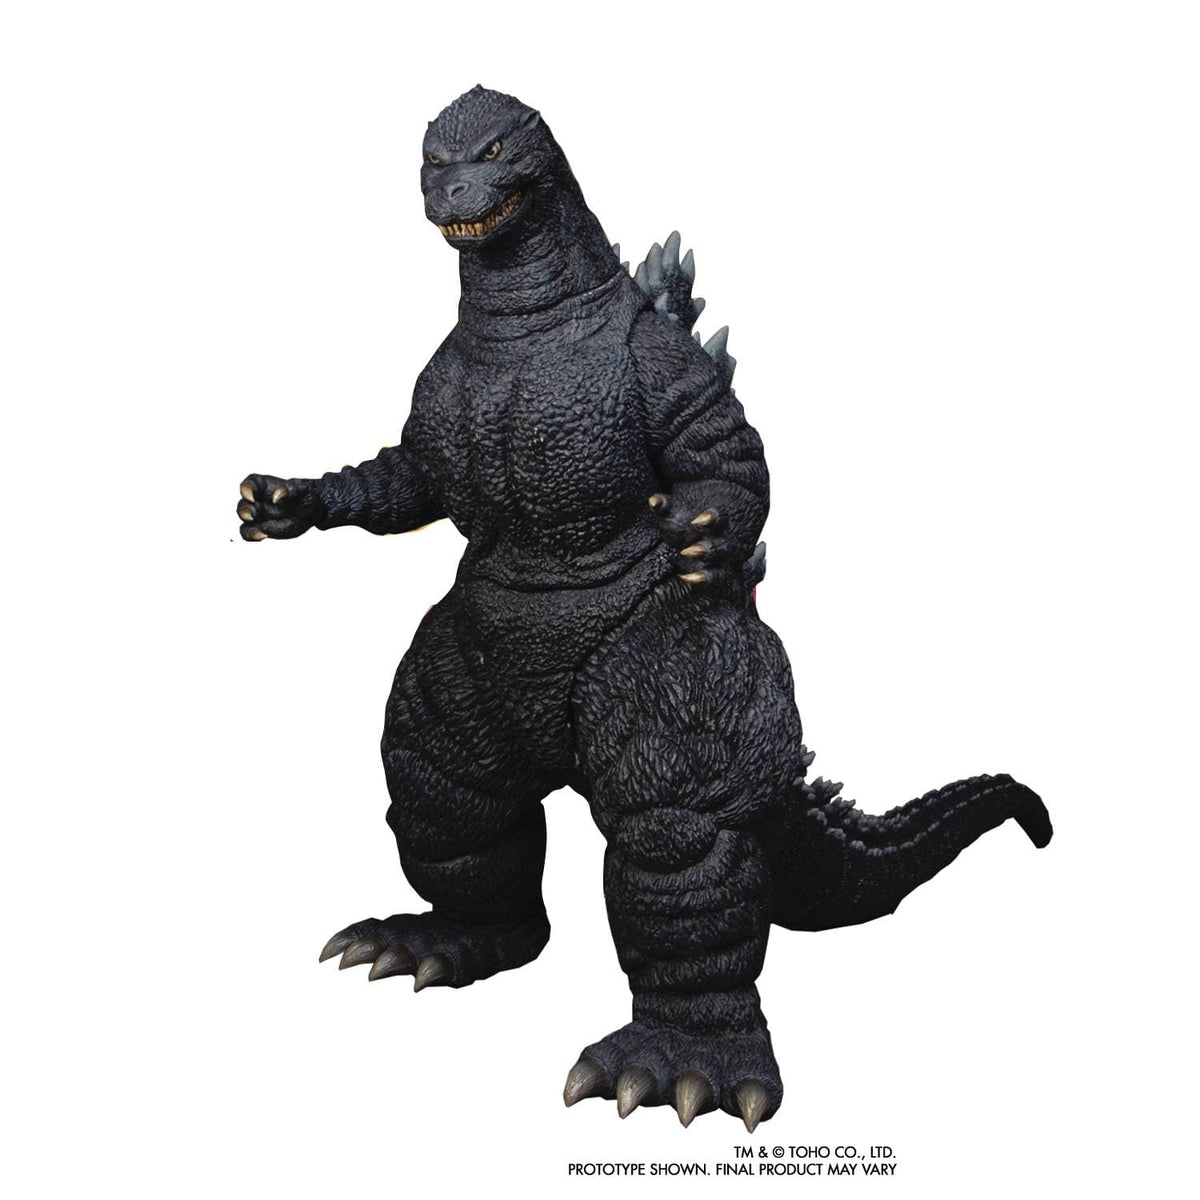 Mezco Ultimate Godzilla Statue